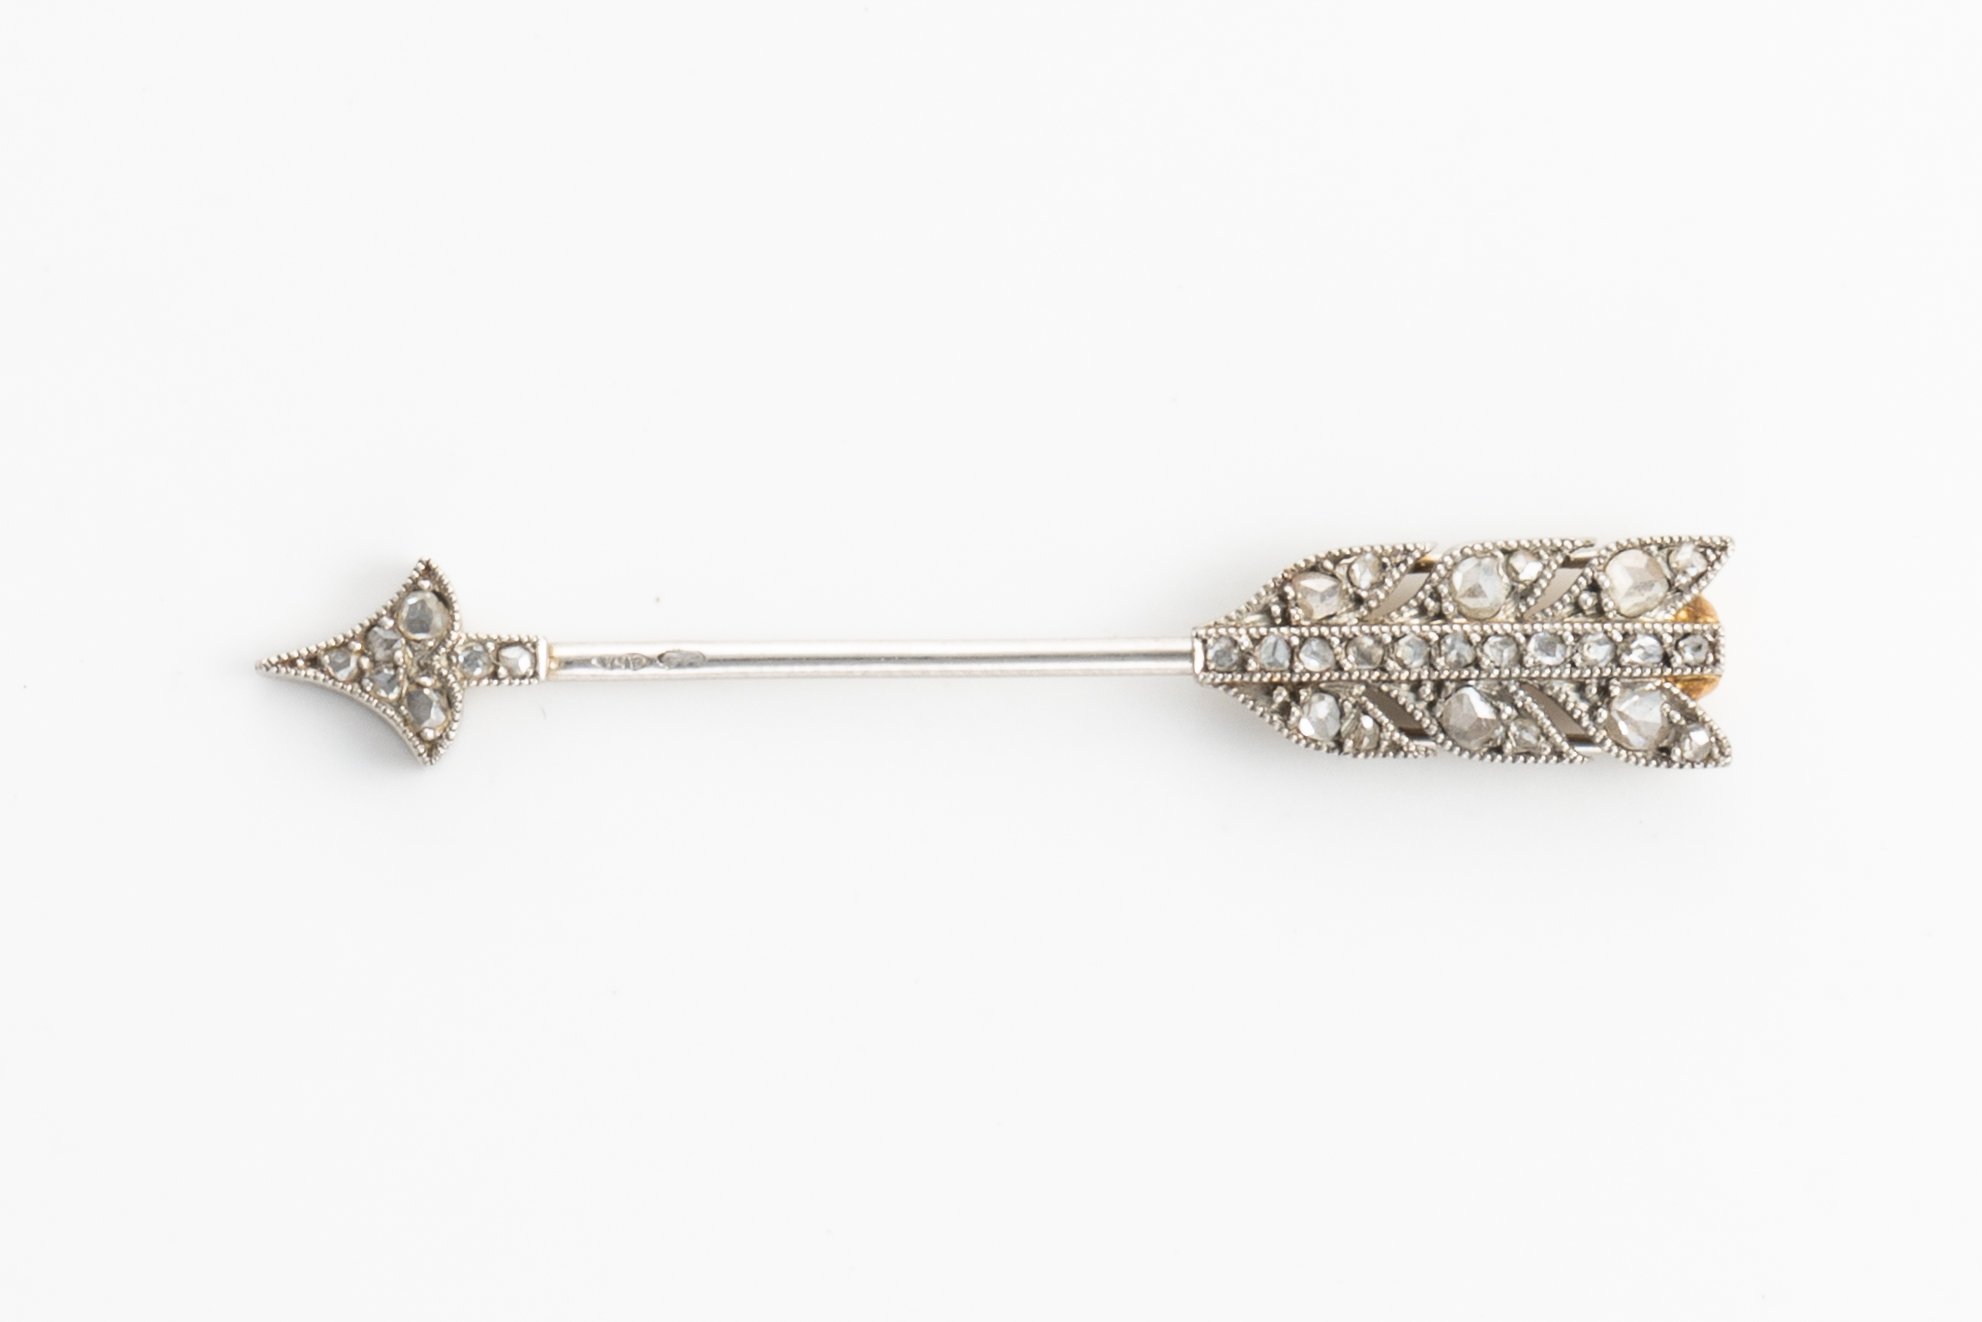 AN EARLY 20TH CENTURY DIAMOND ARROW PIN